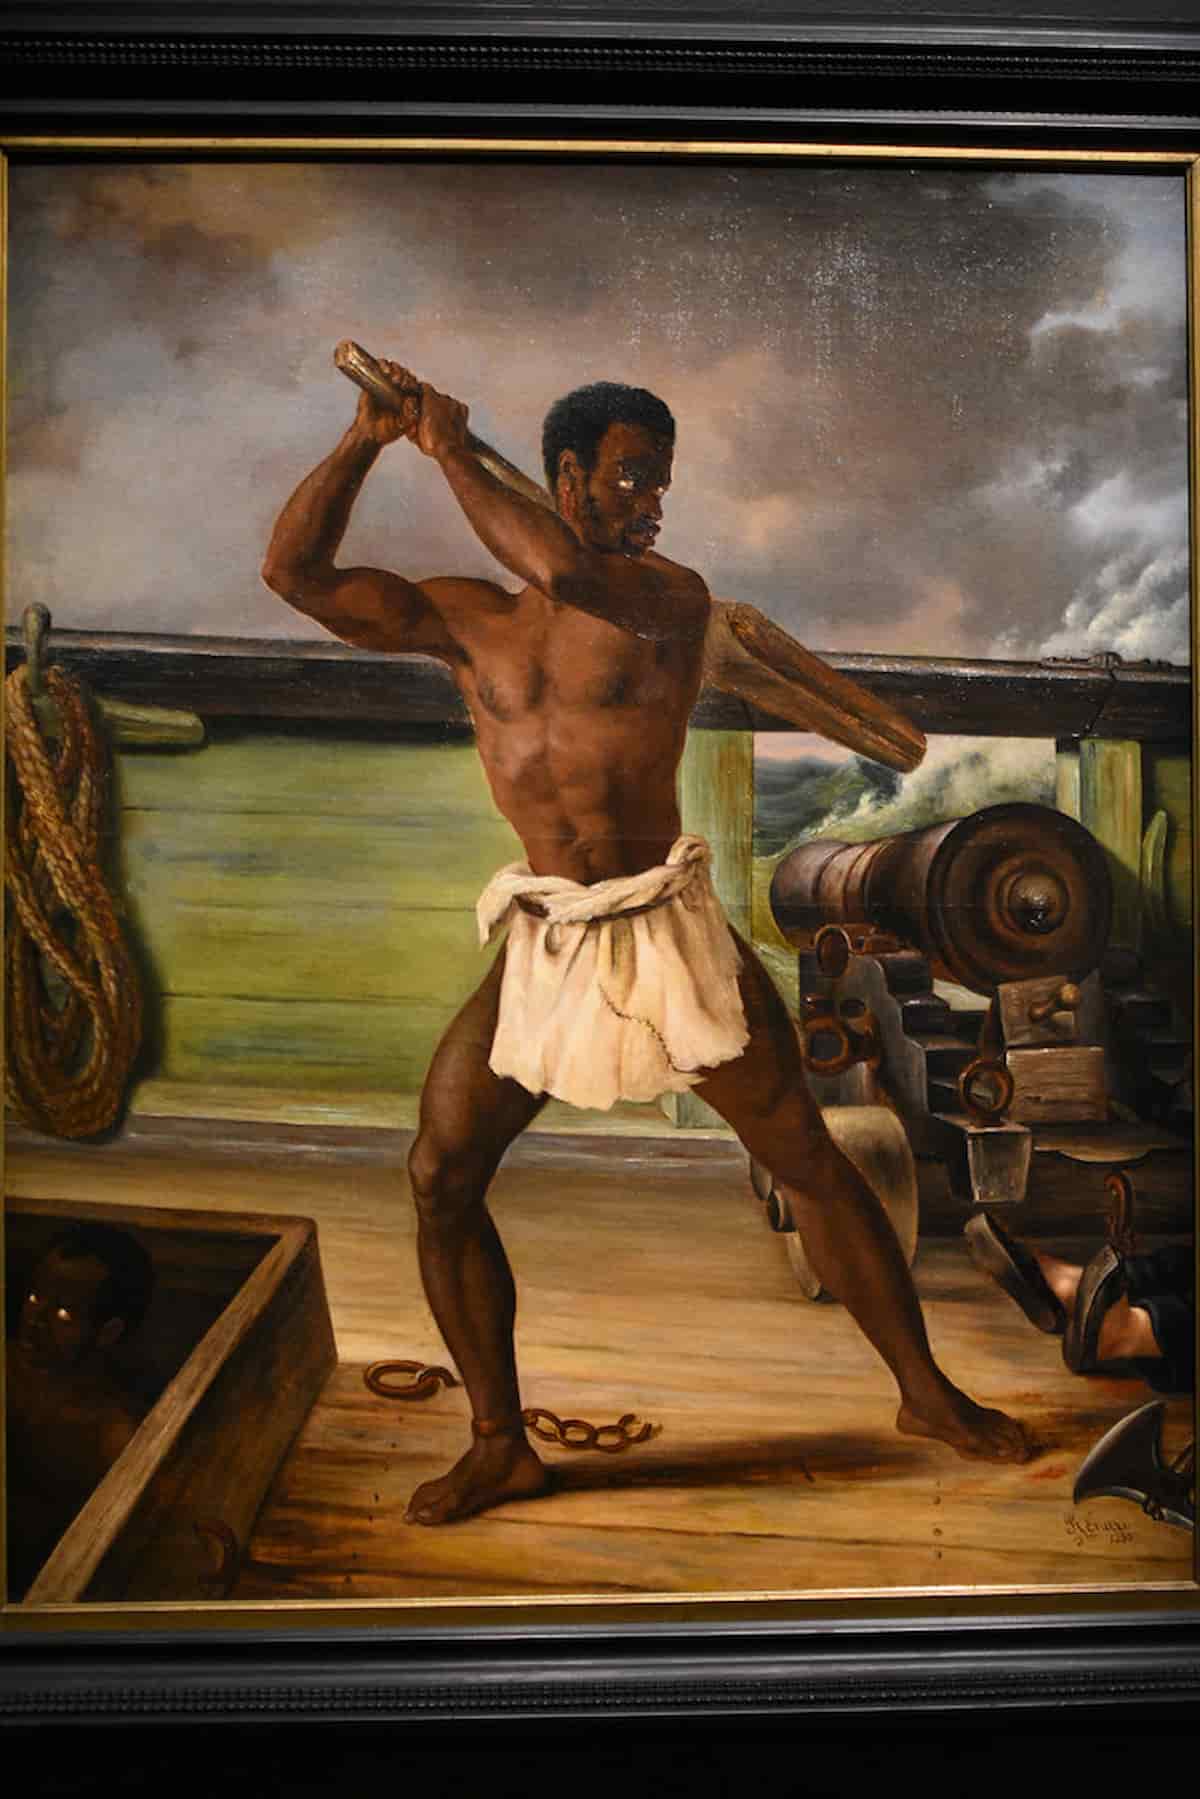 spotcovery-slave-rebellion-on-a-save-ship-by-edouard-antoine-renard-slave-ship-rebellions